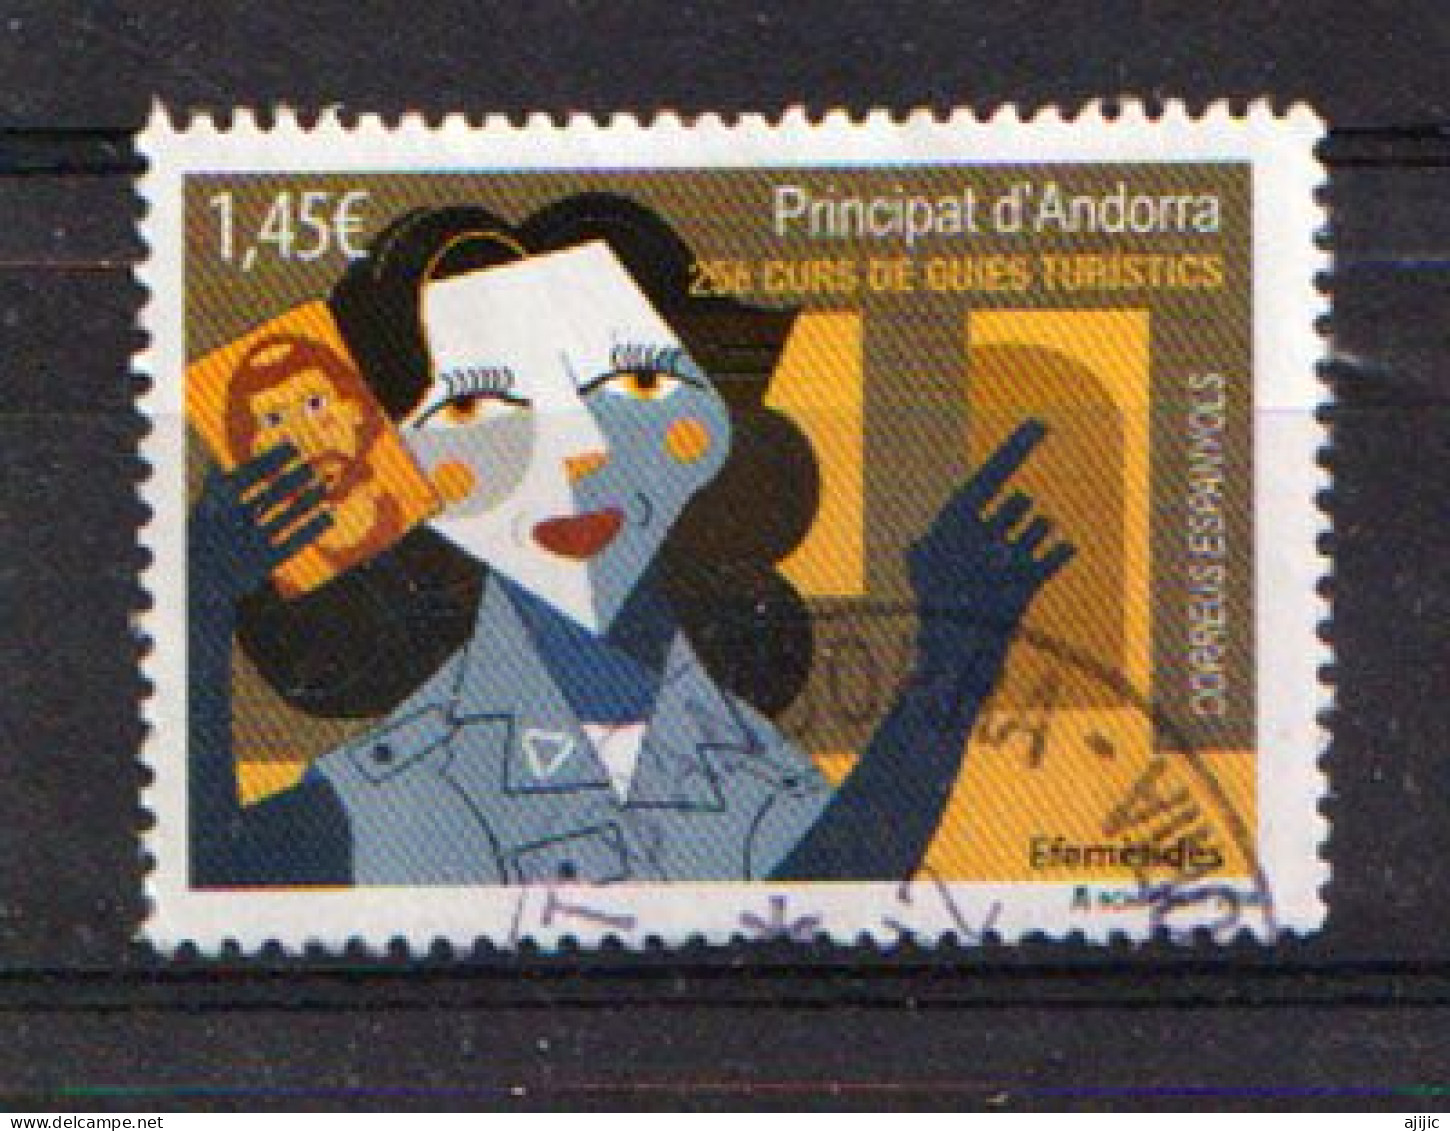 Asociación De Guías De Turismo De Andorra, Cancelado 1ra Calidad. Alto Facial (2018) - Used Stamps